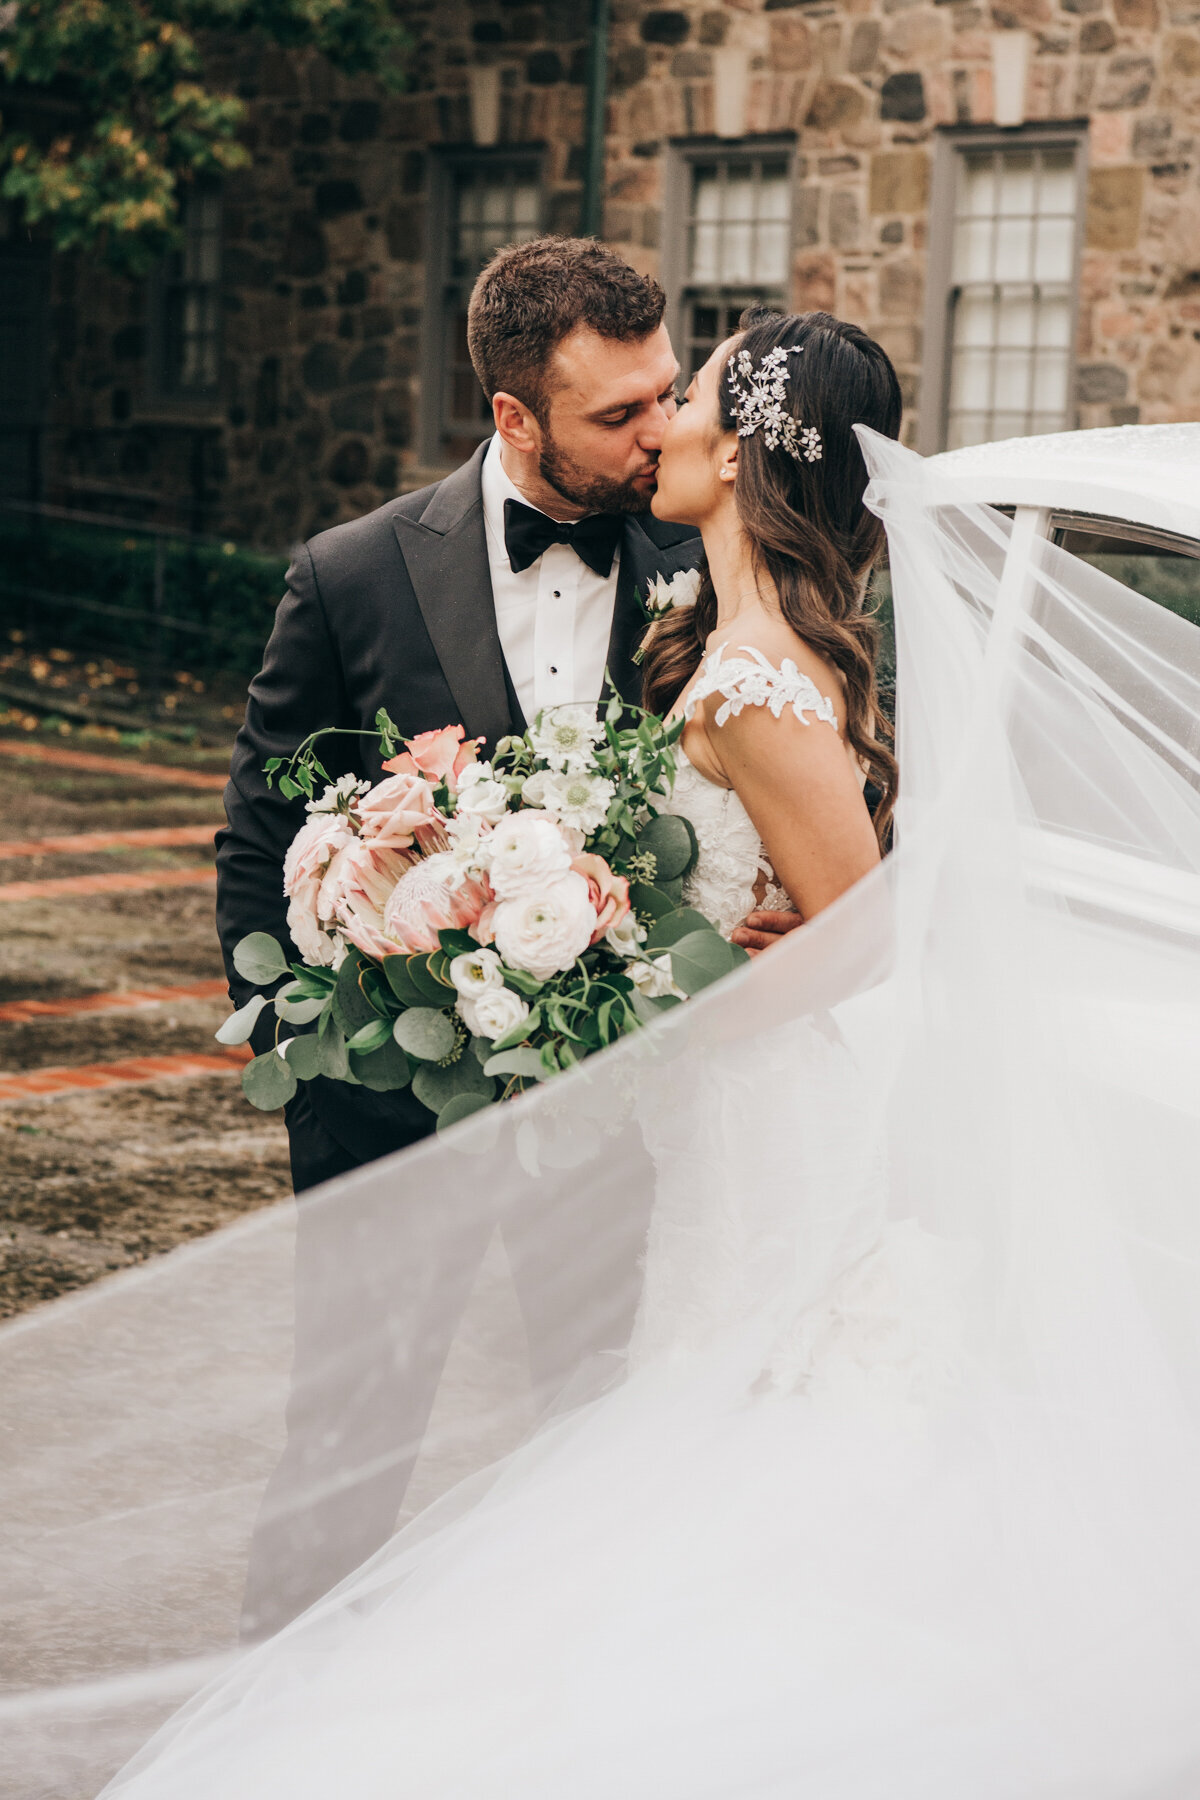 Bride's veil swoops elegantly in front during wedding portraits